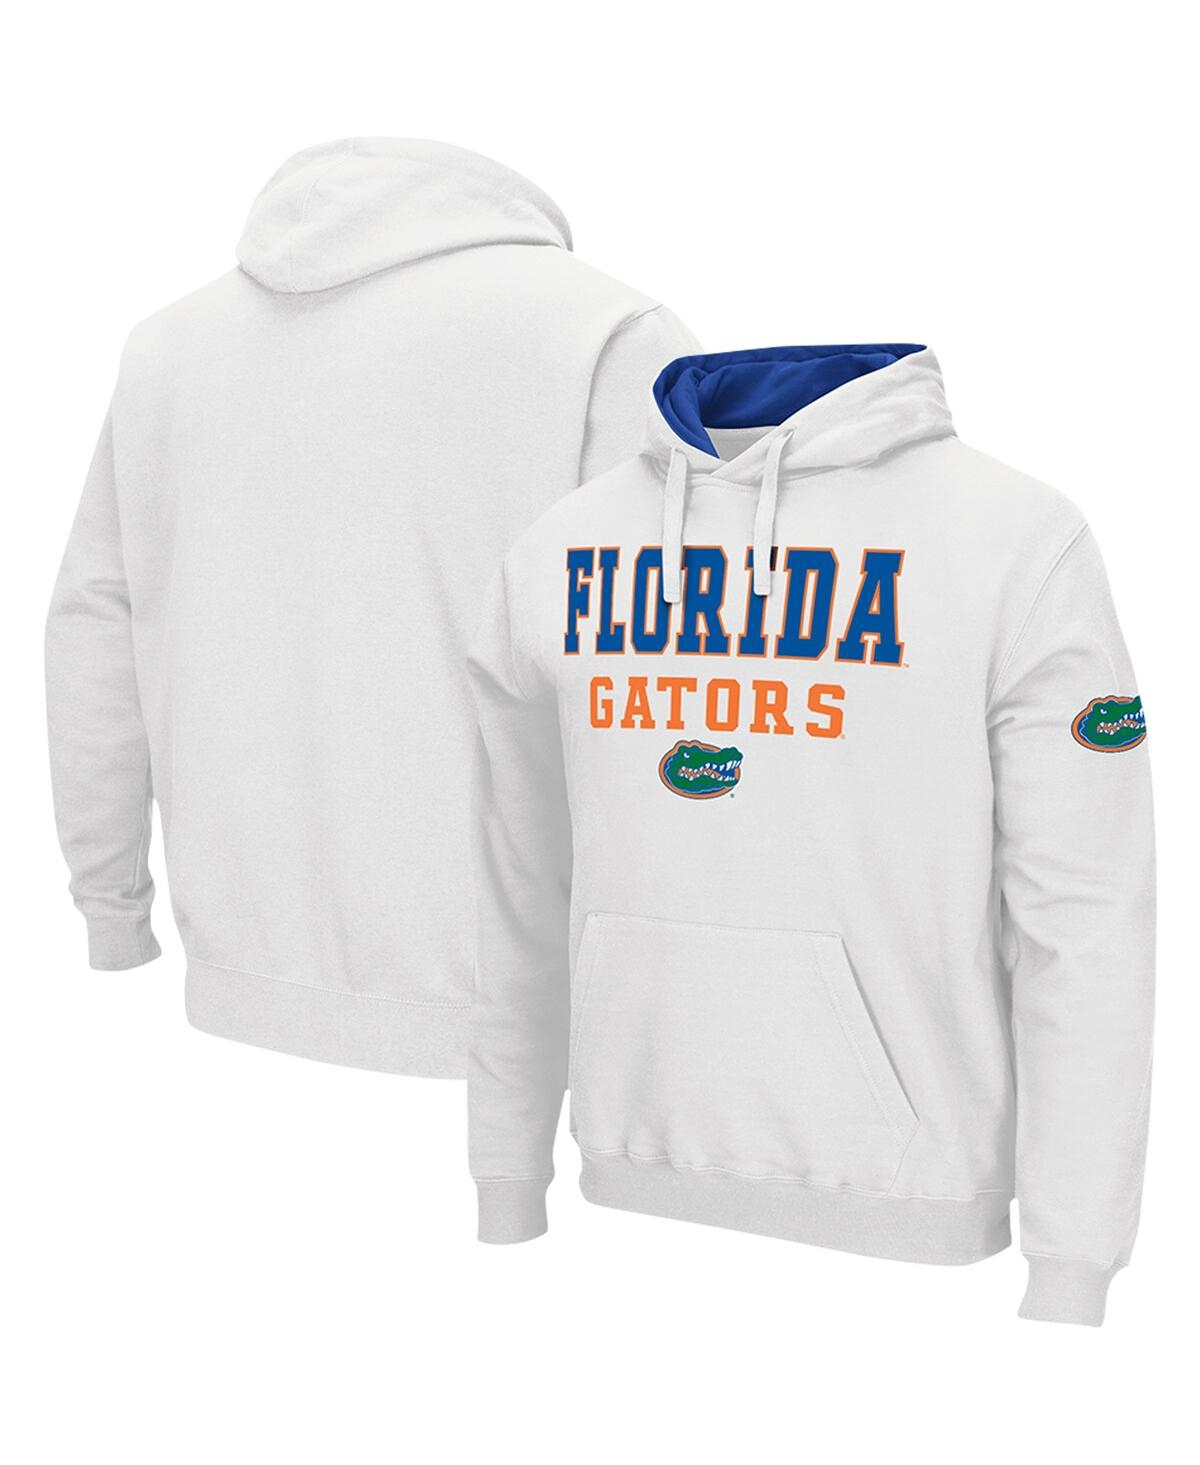 Men's White Florida Gators Sunrise Pullover Hoodie - White